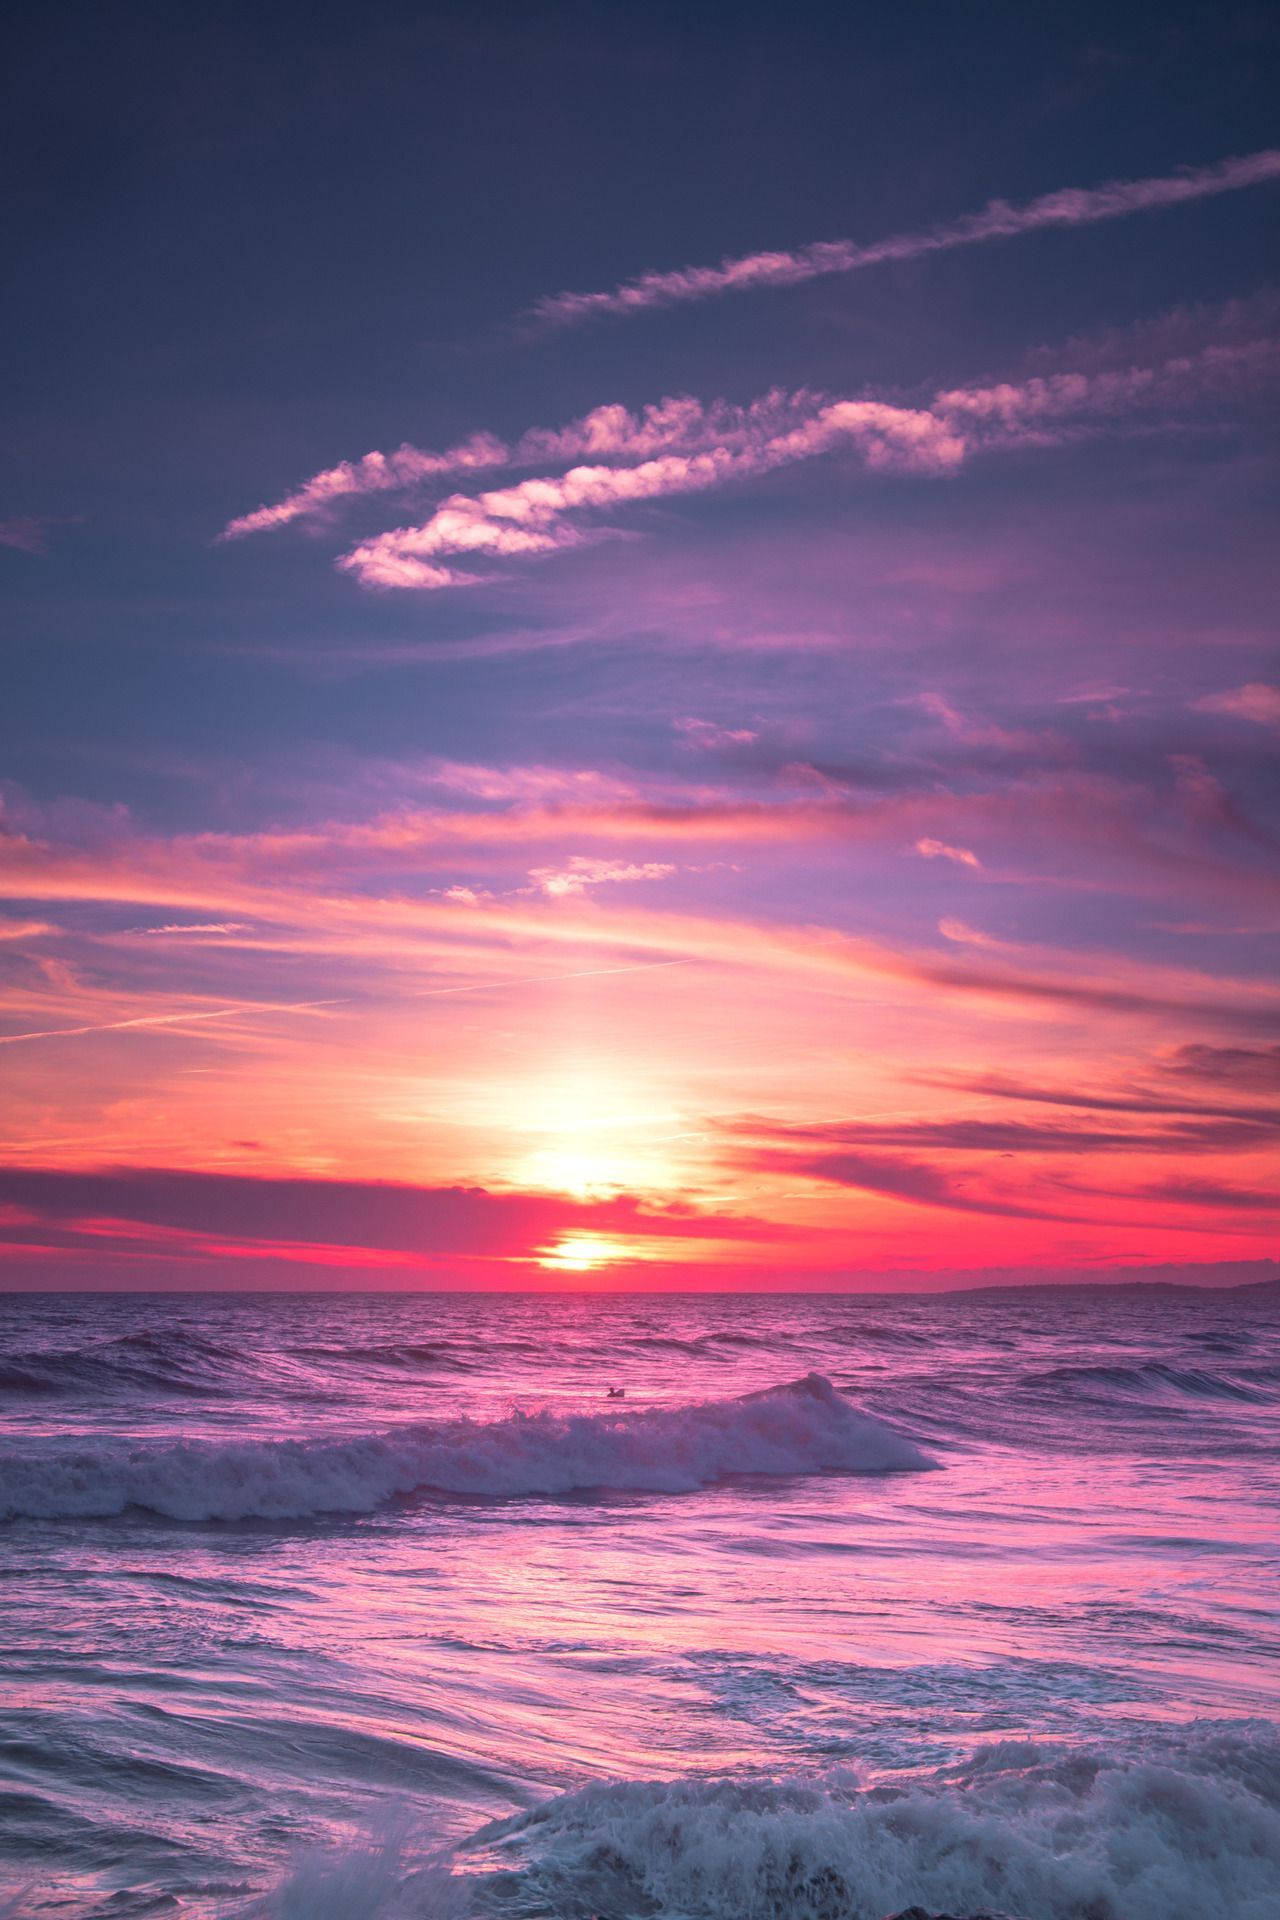 Purple Aesthetic Sunset Sky Over Ocean Waves